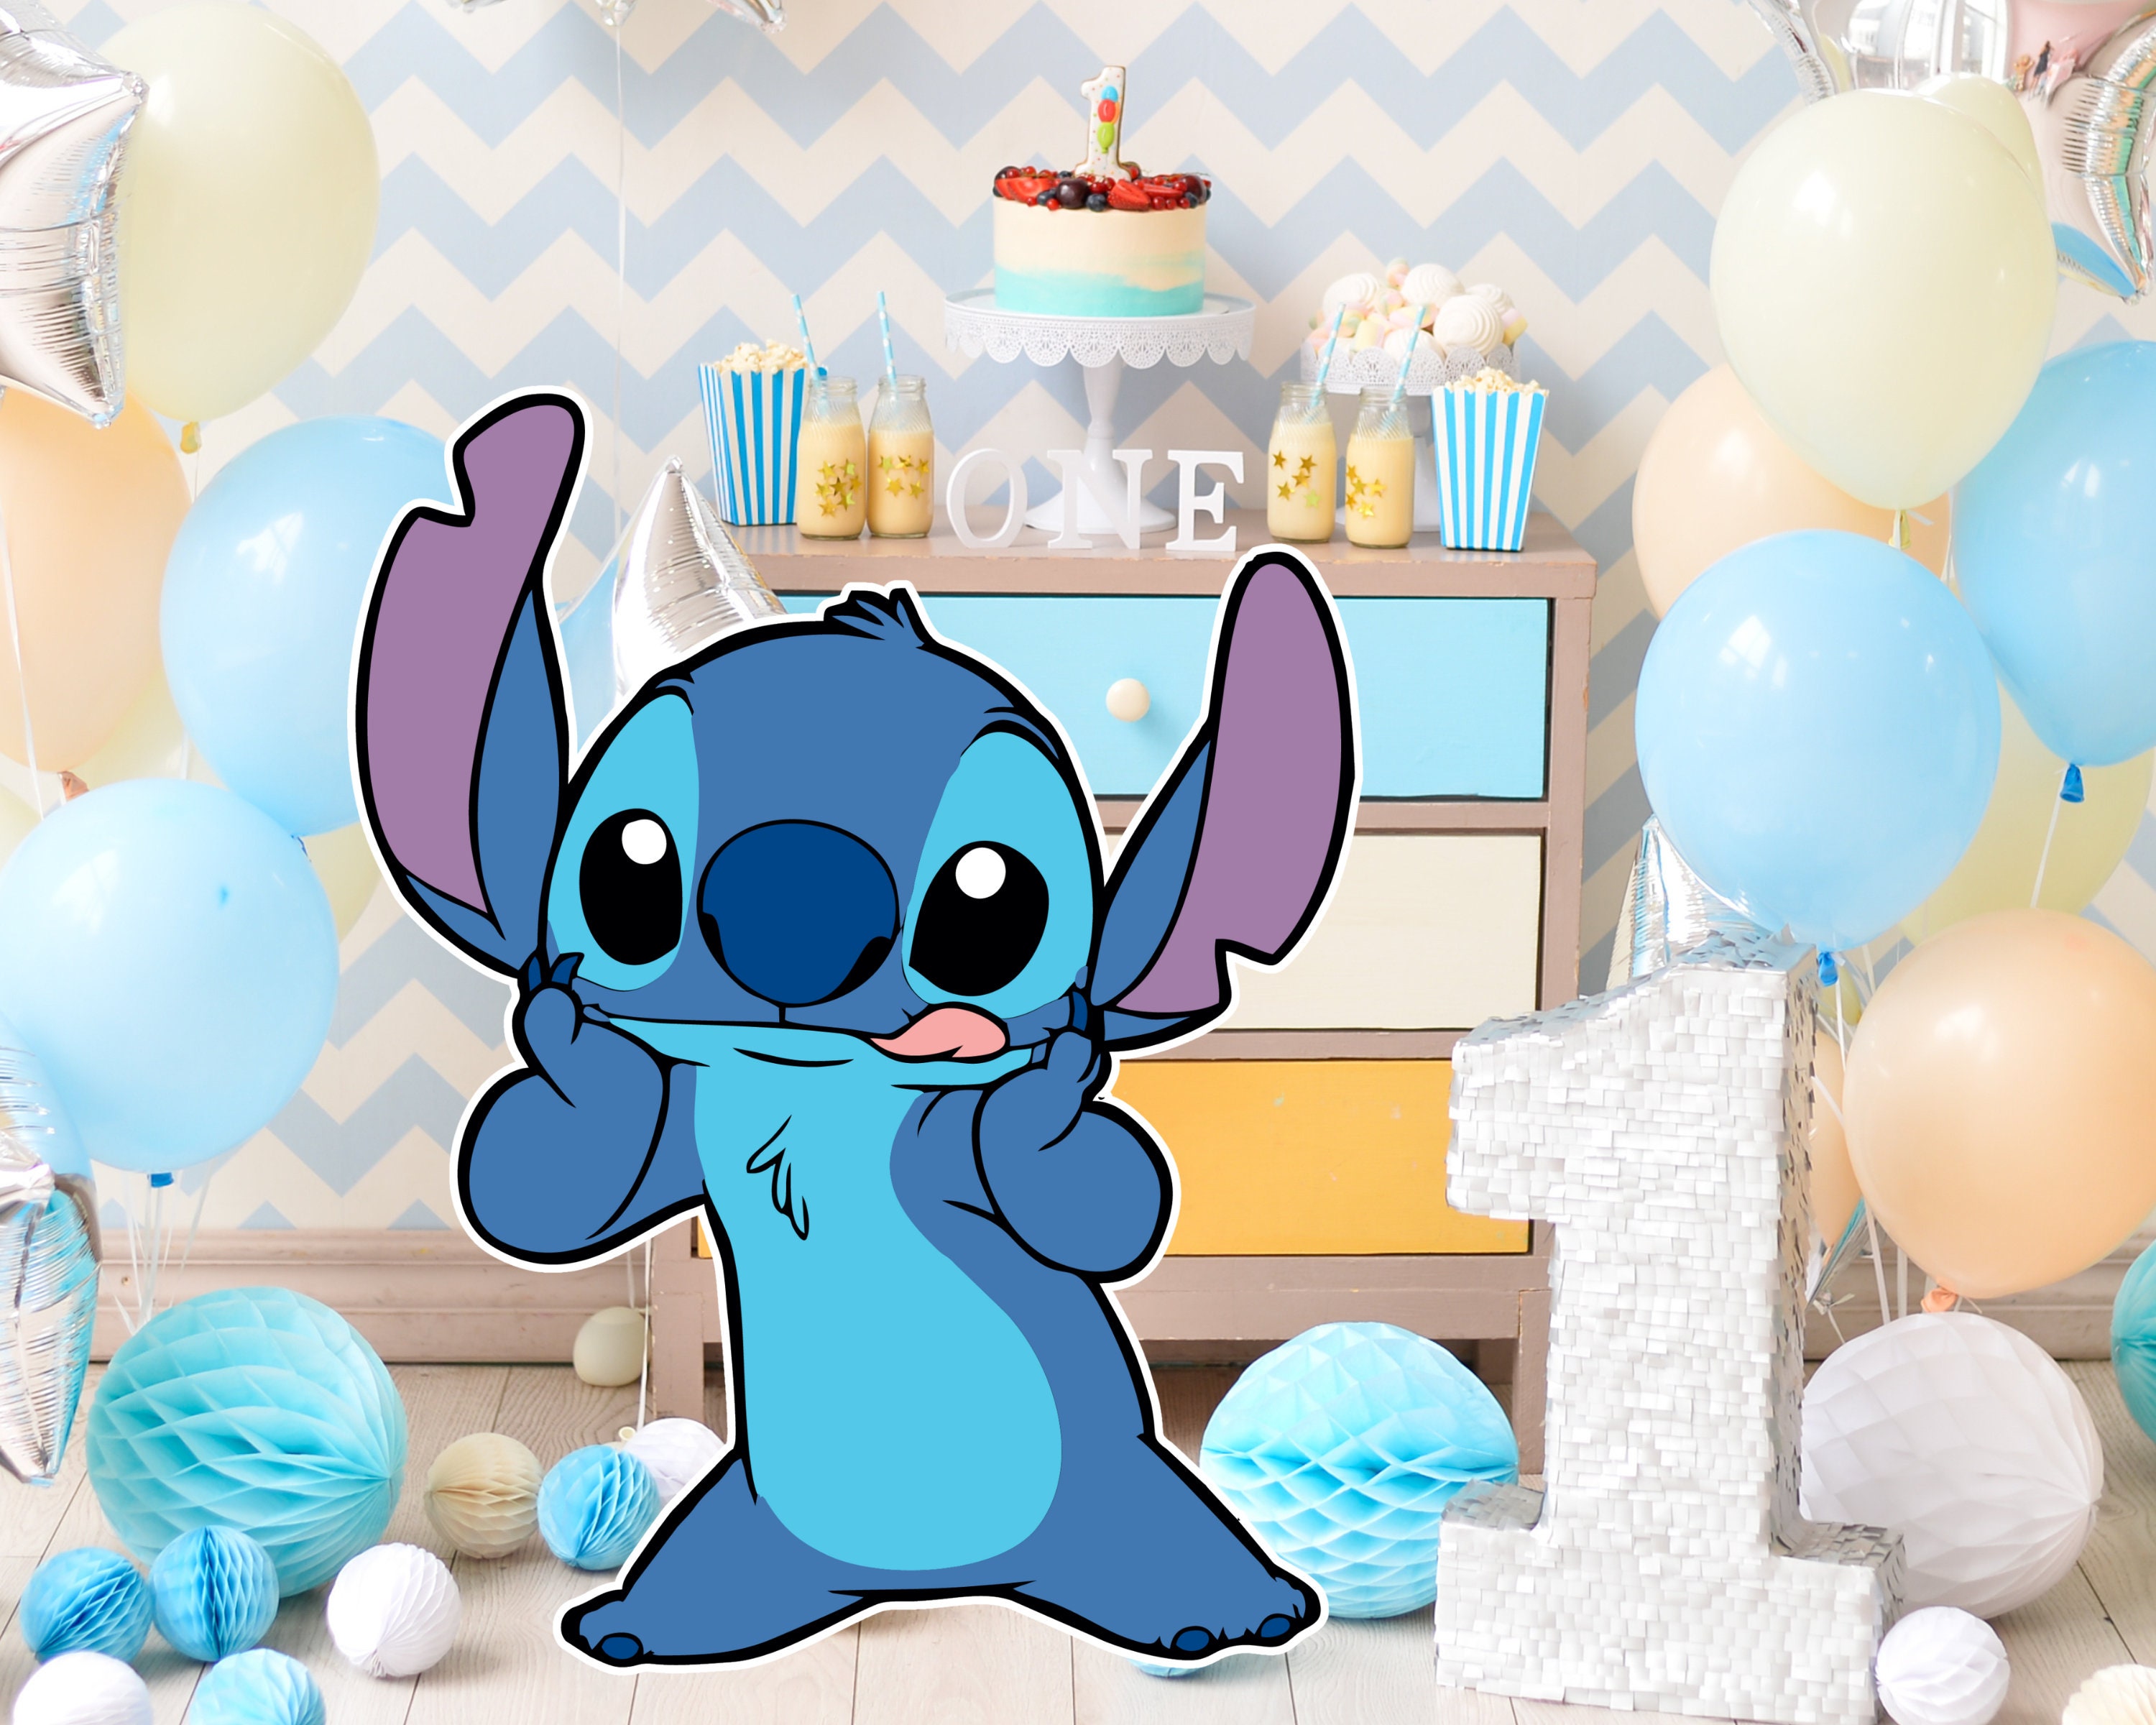 Lilo and Stitch – Character.com